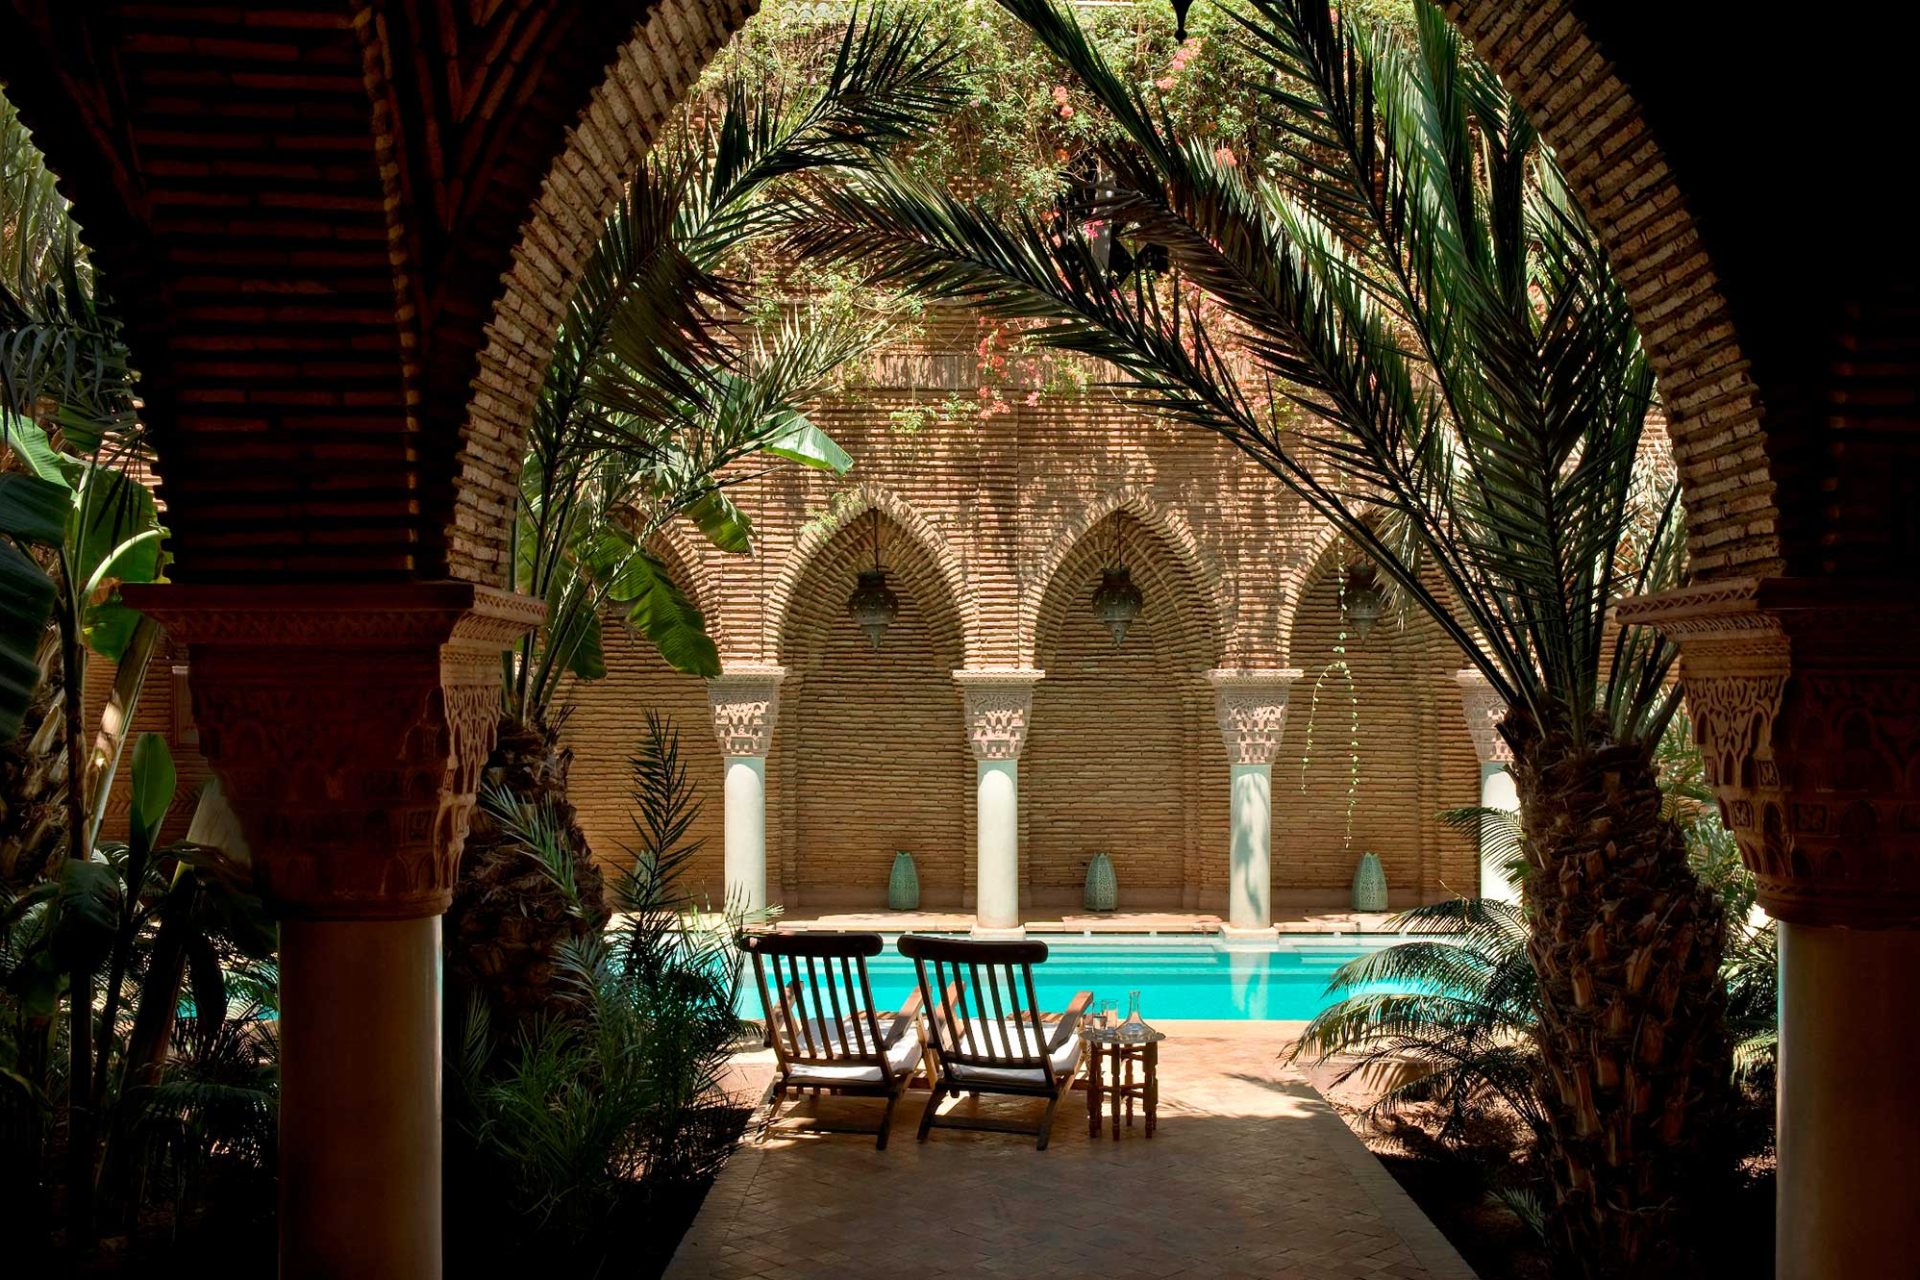 A beautiful pool in a riad in marrakesh